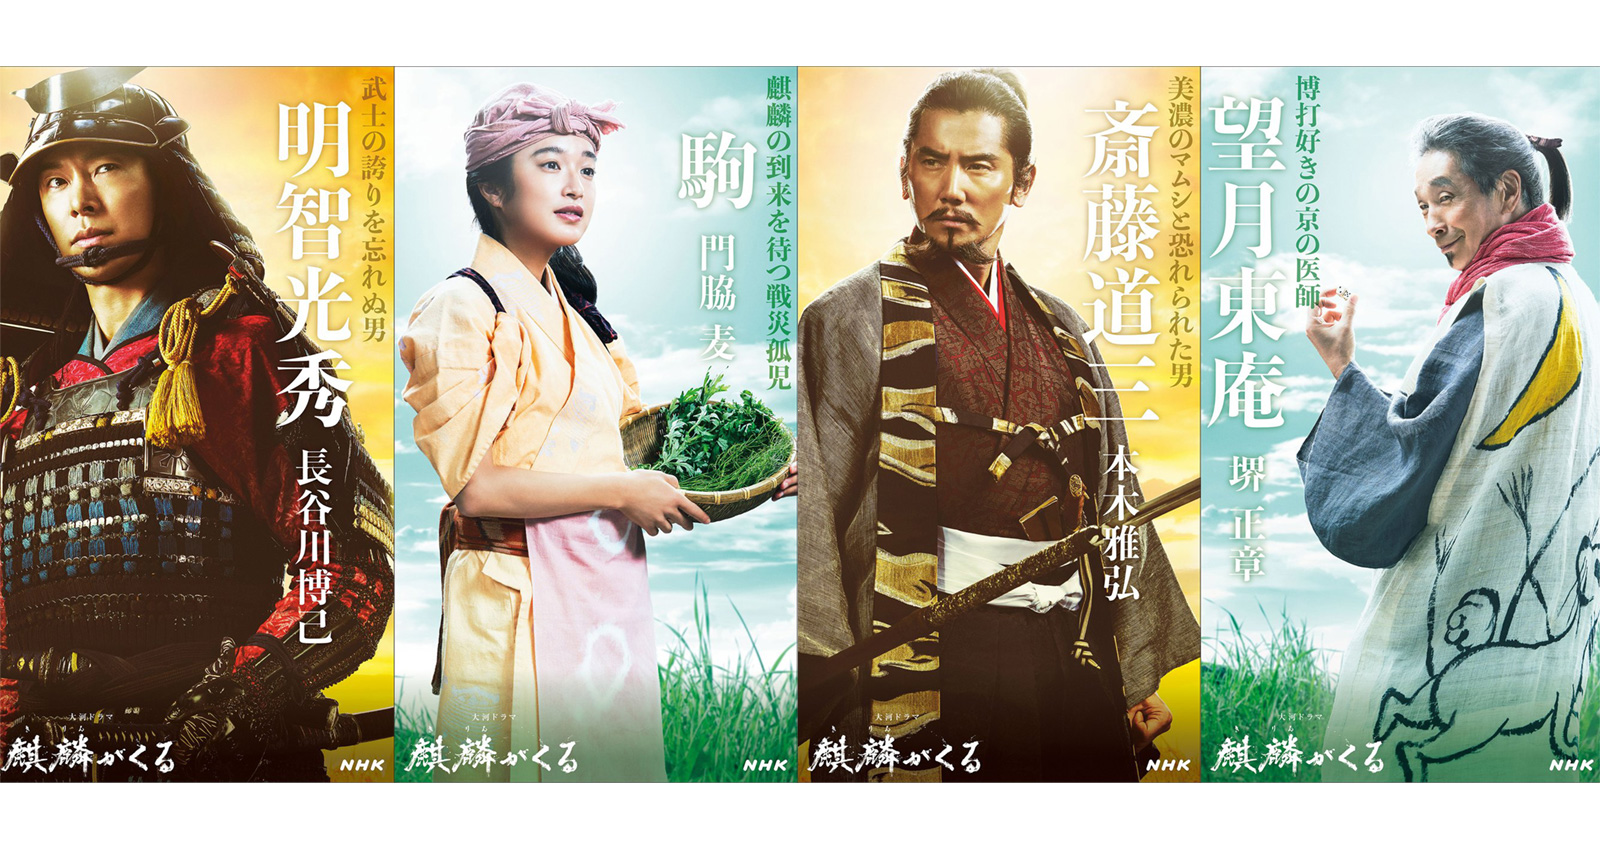 NHK大河ドラマ「麒麟がくる」のキャストビジュアルが続々と公開 